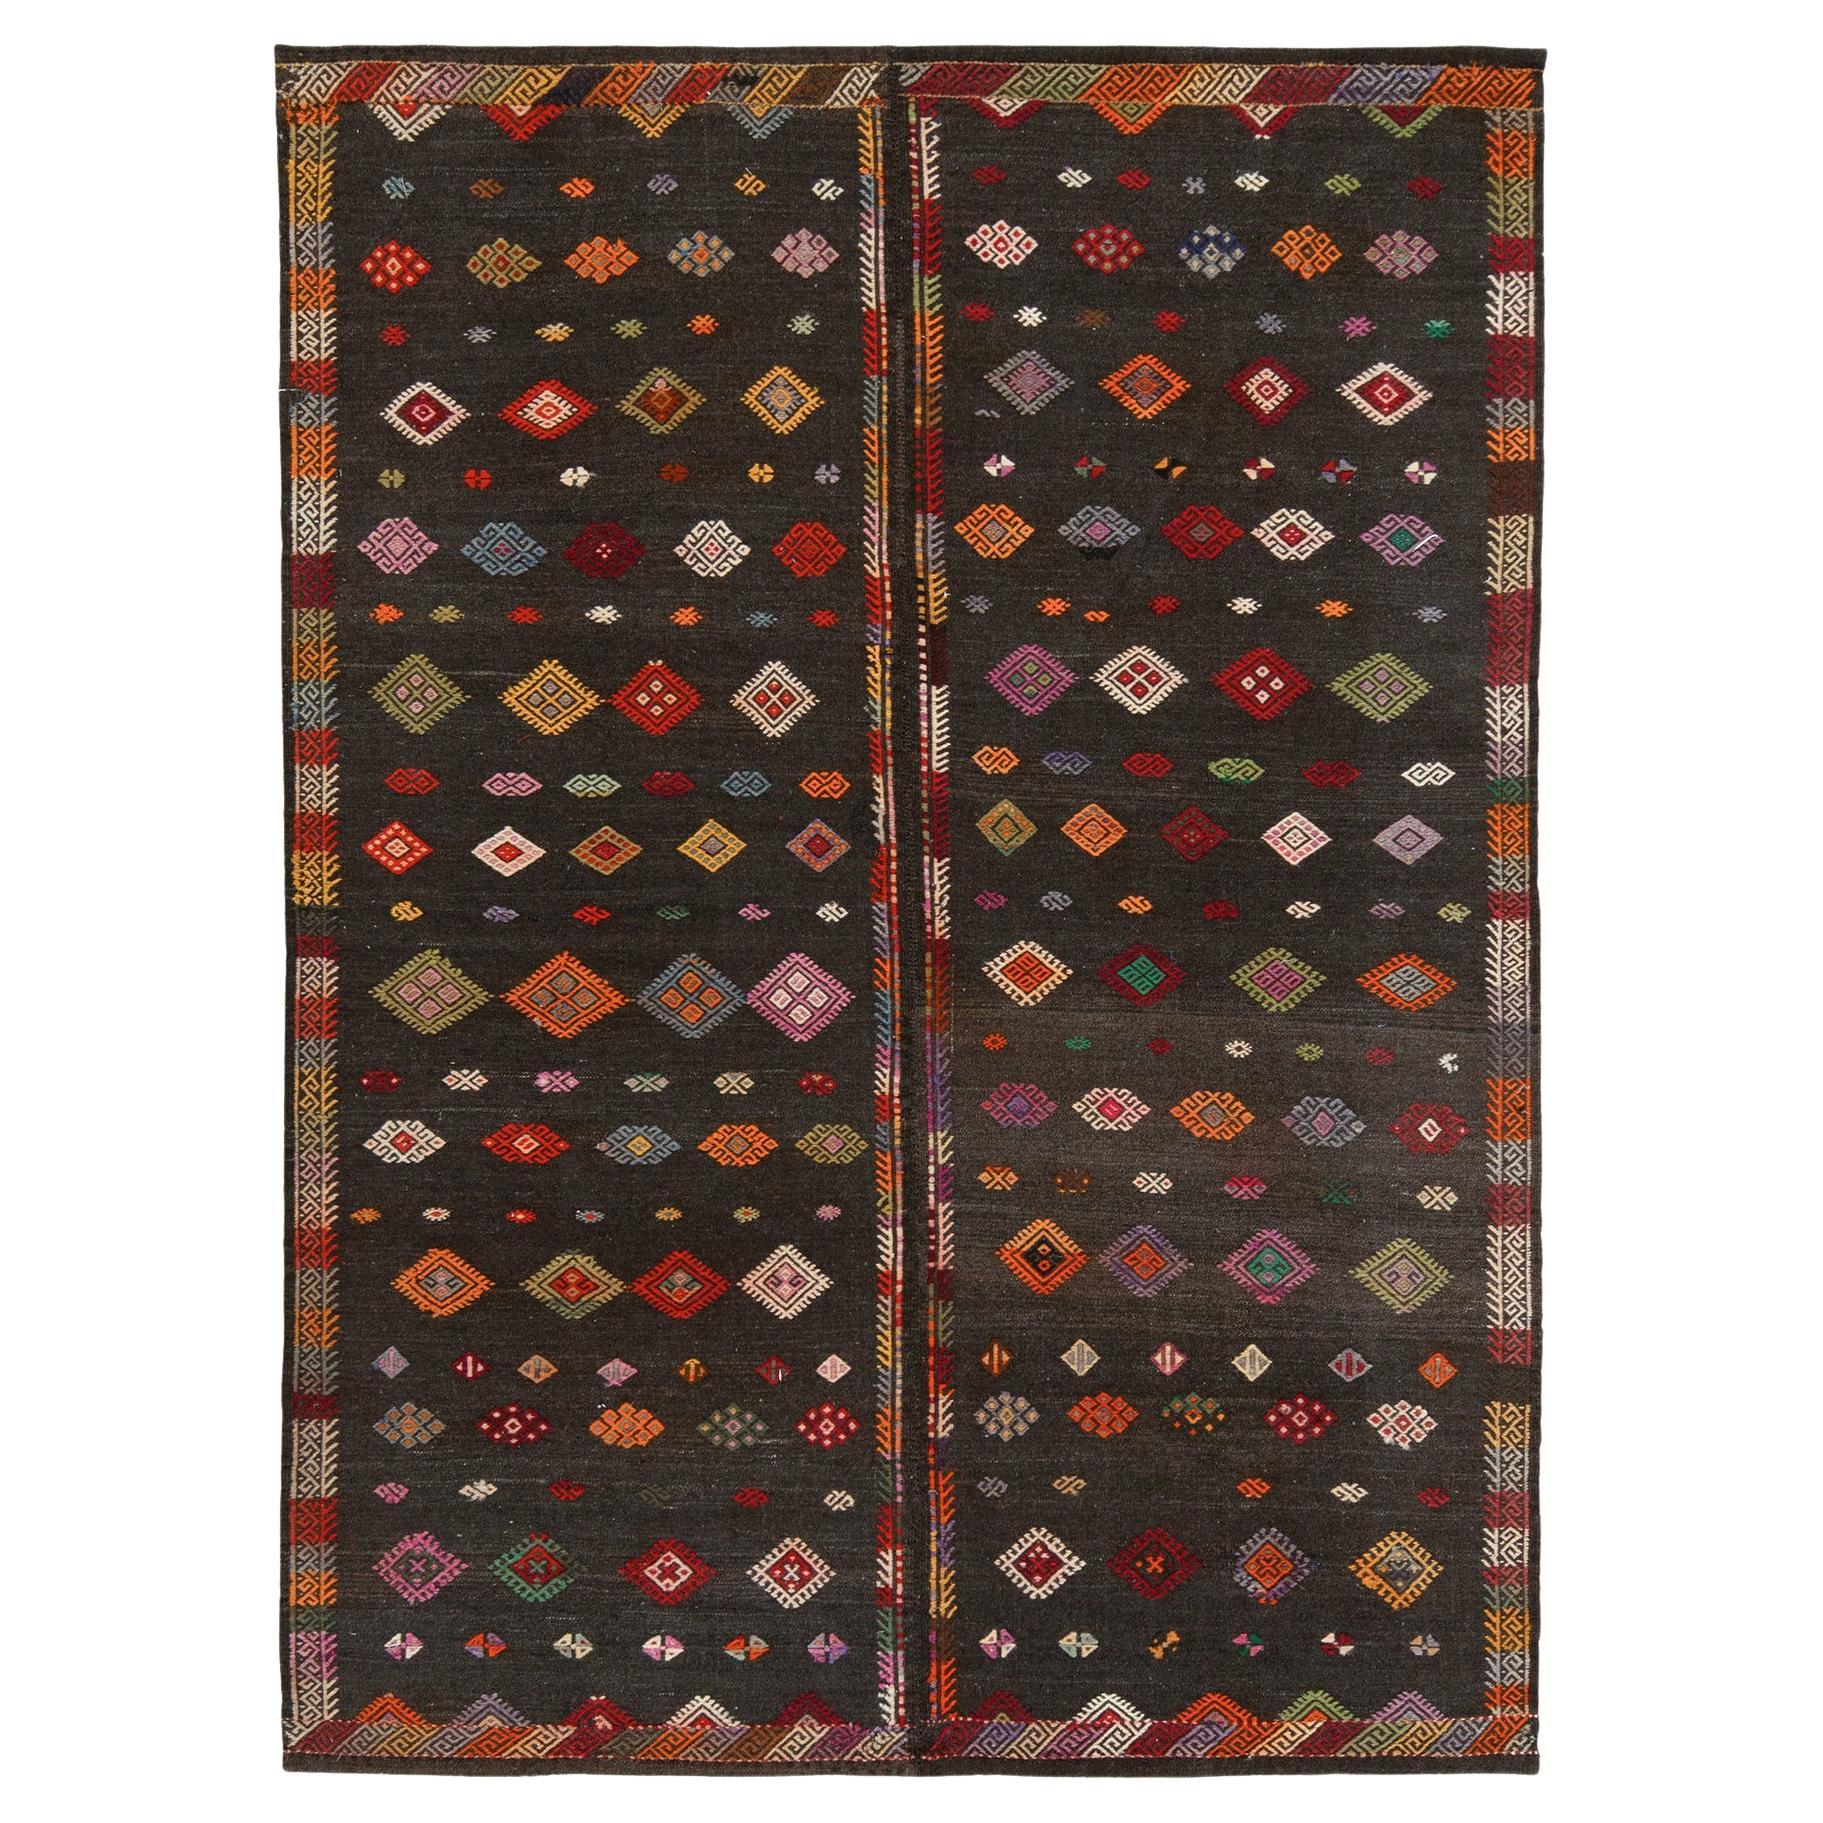 1950s Vintage Kilim Rug in Gray-Brown, Multicolor Geometric Patterns